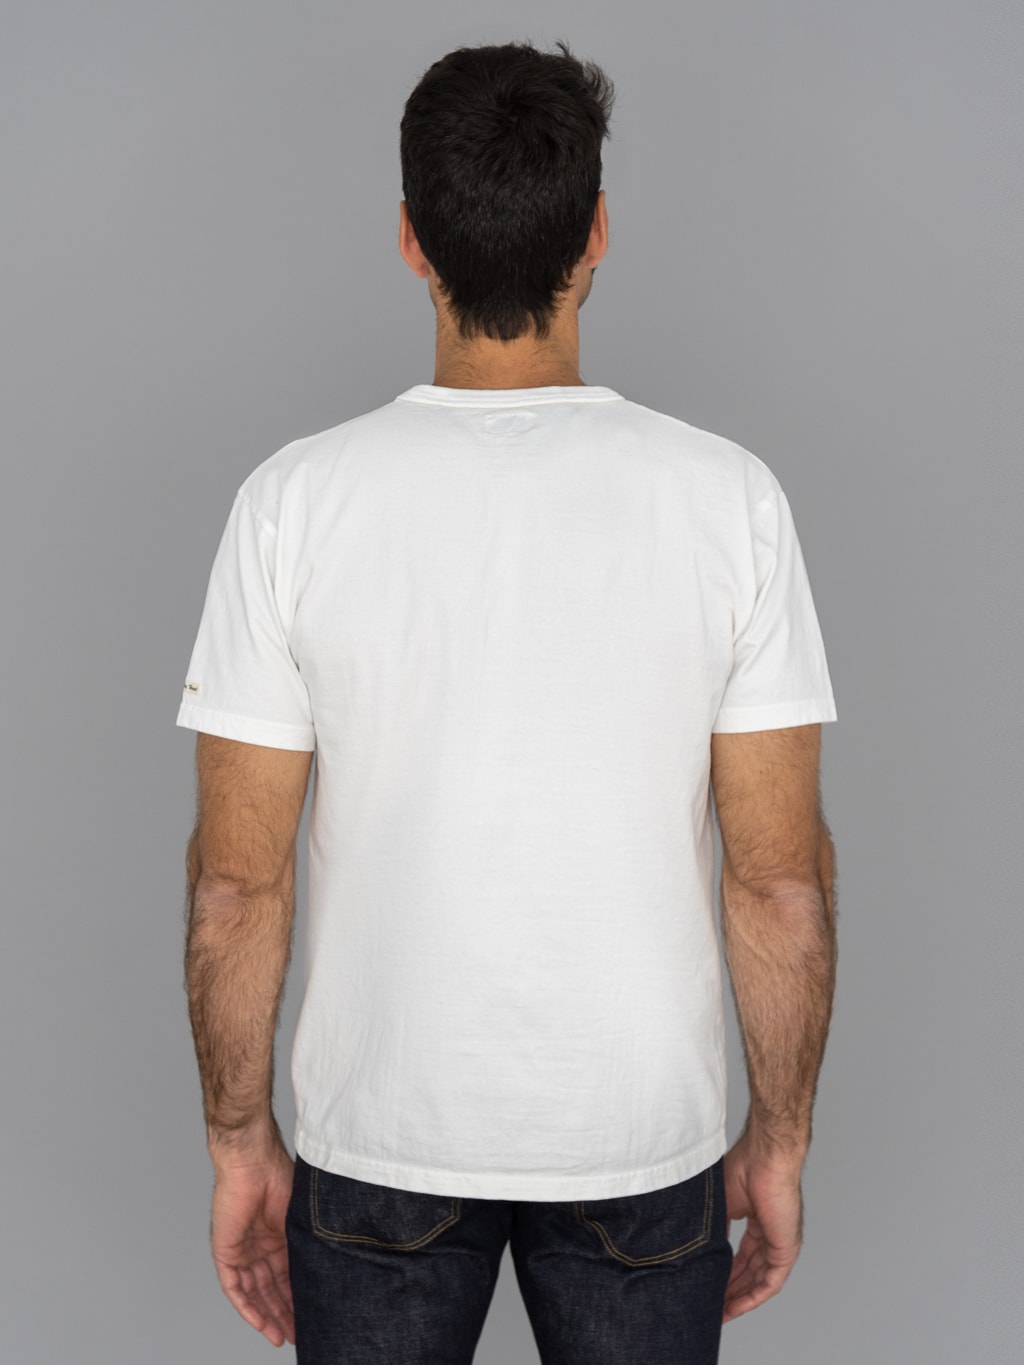 The Flat Head Plain Heavyweight TShirt white back fit